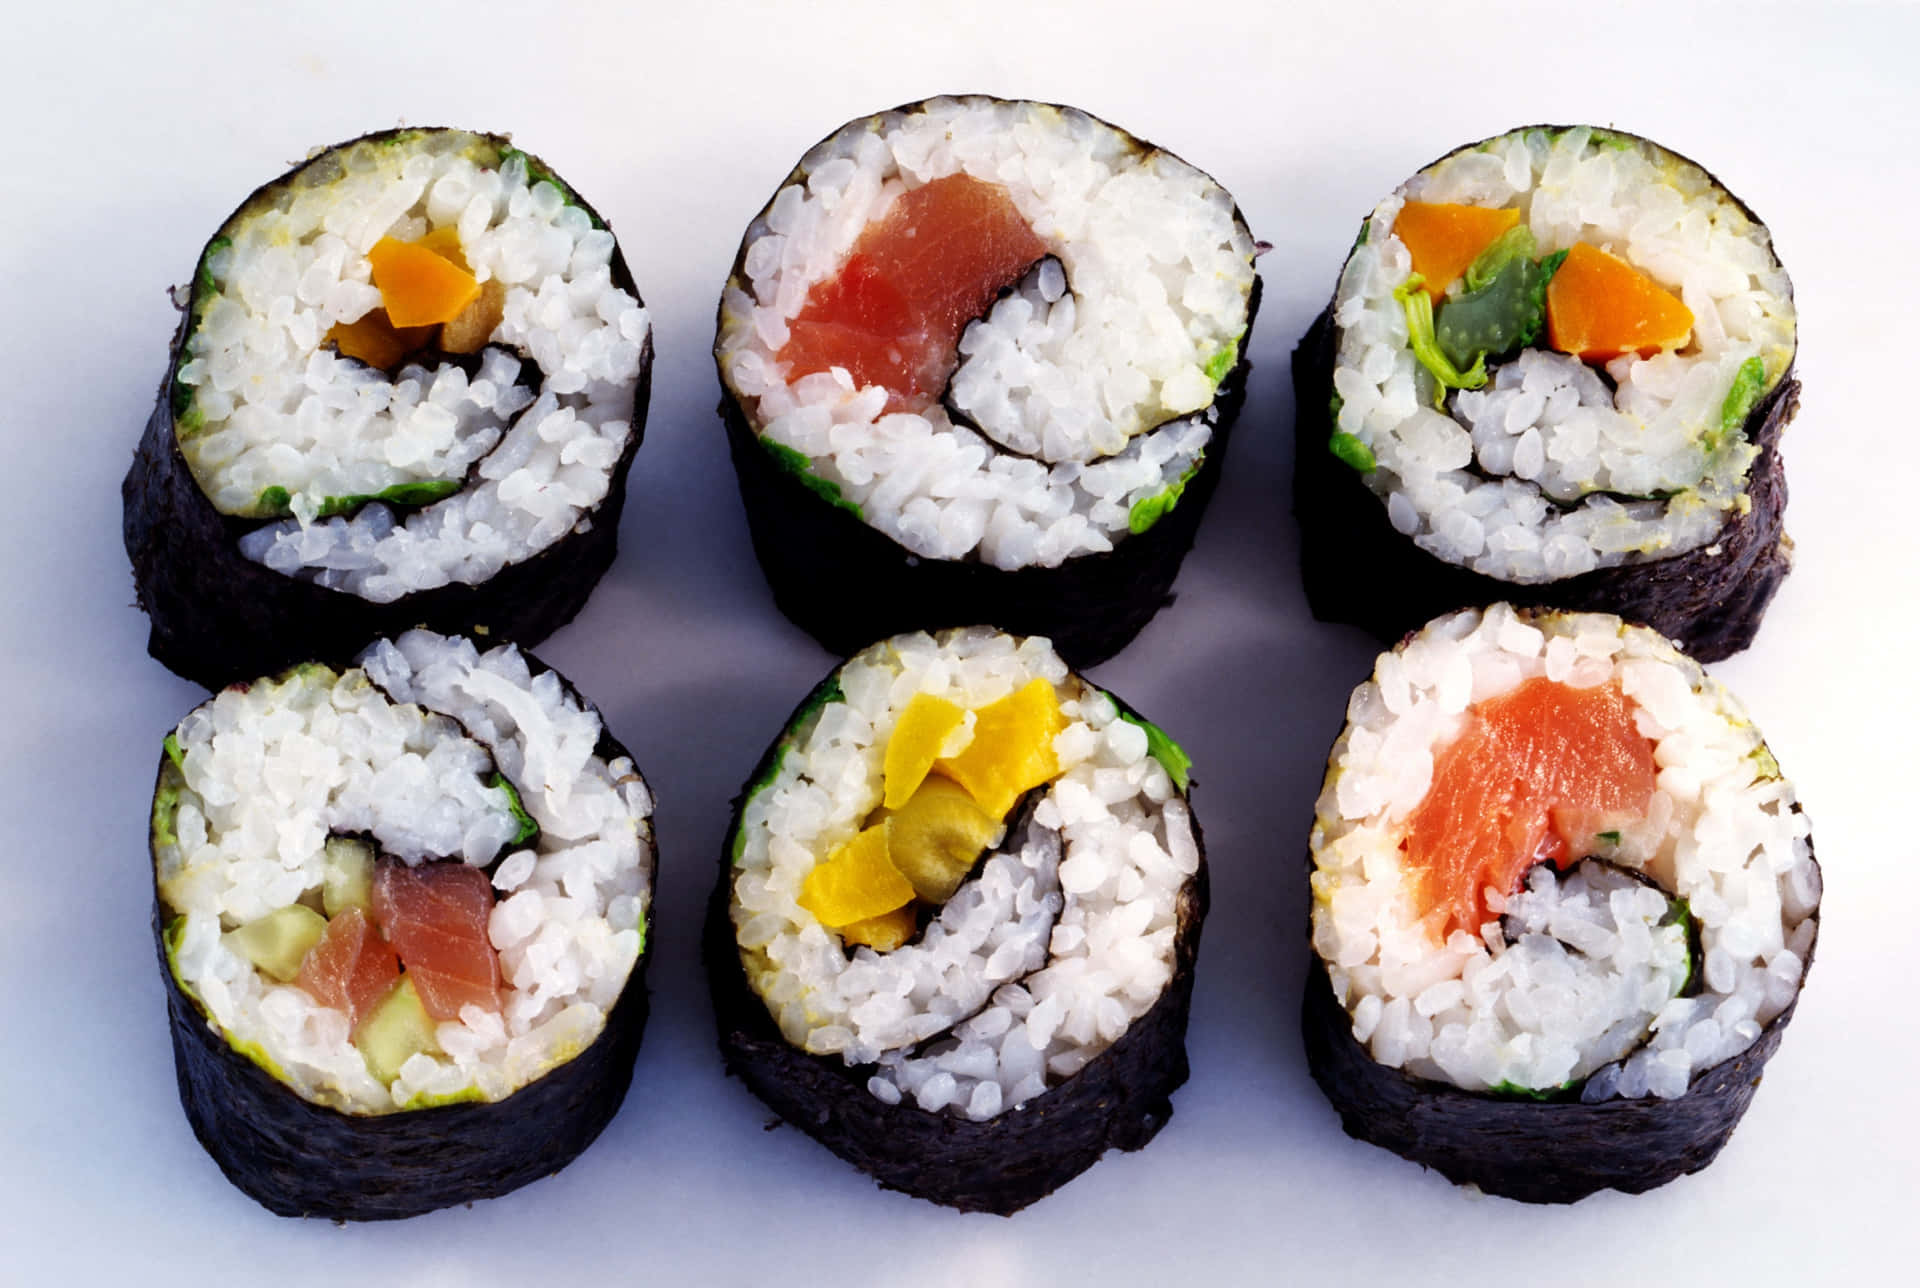 Enjoy a delicious assortment of sushi rolls tonight!